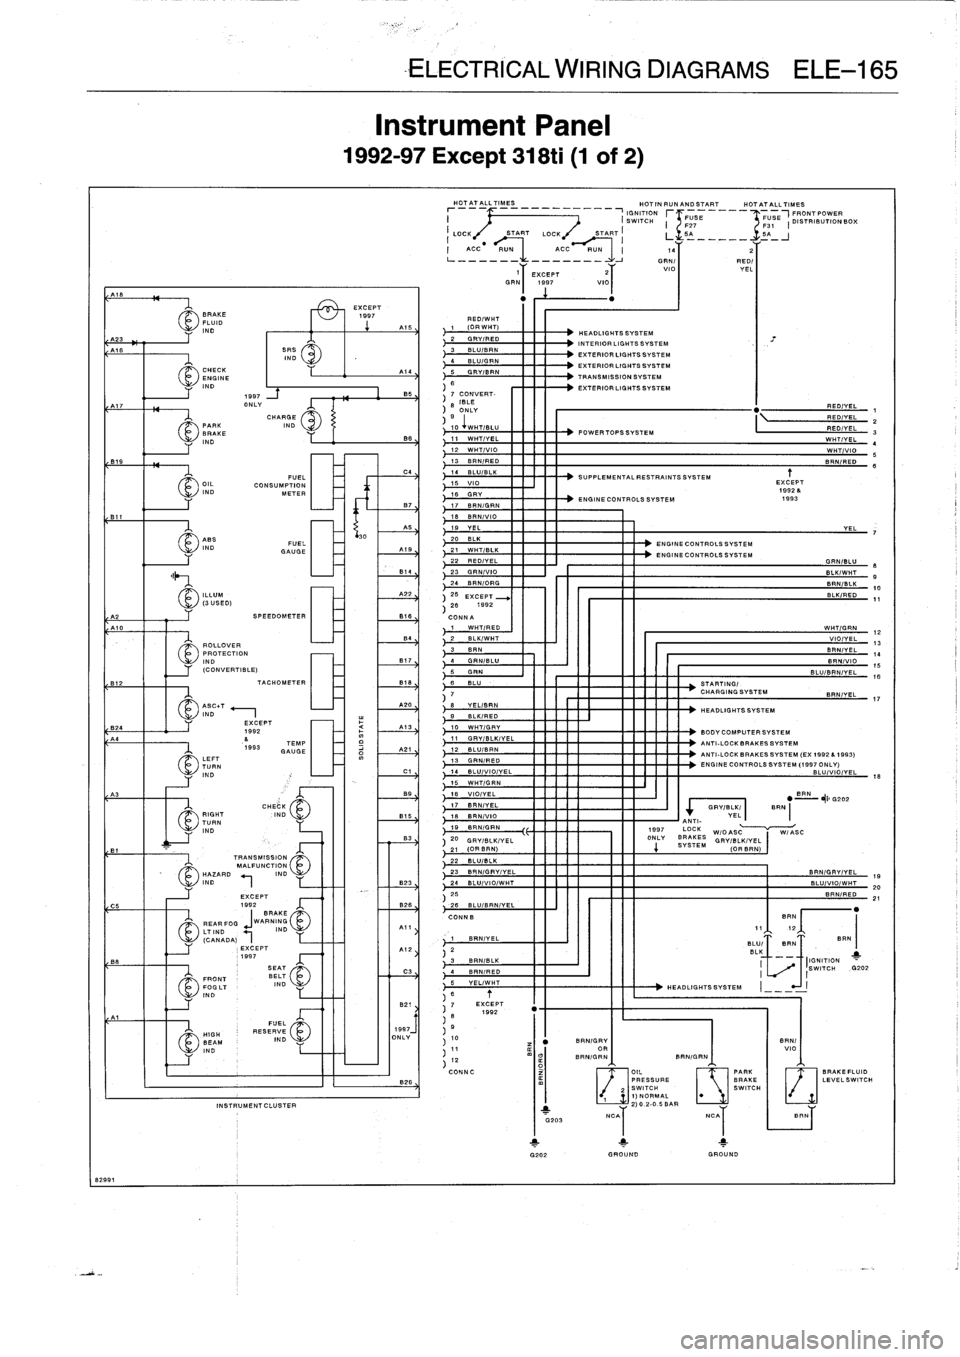 1993 tbi ecm wiring diagram c1500